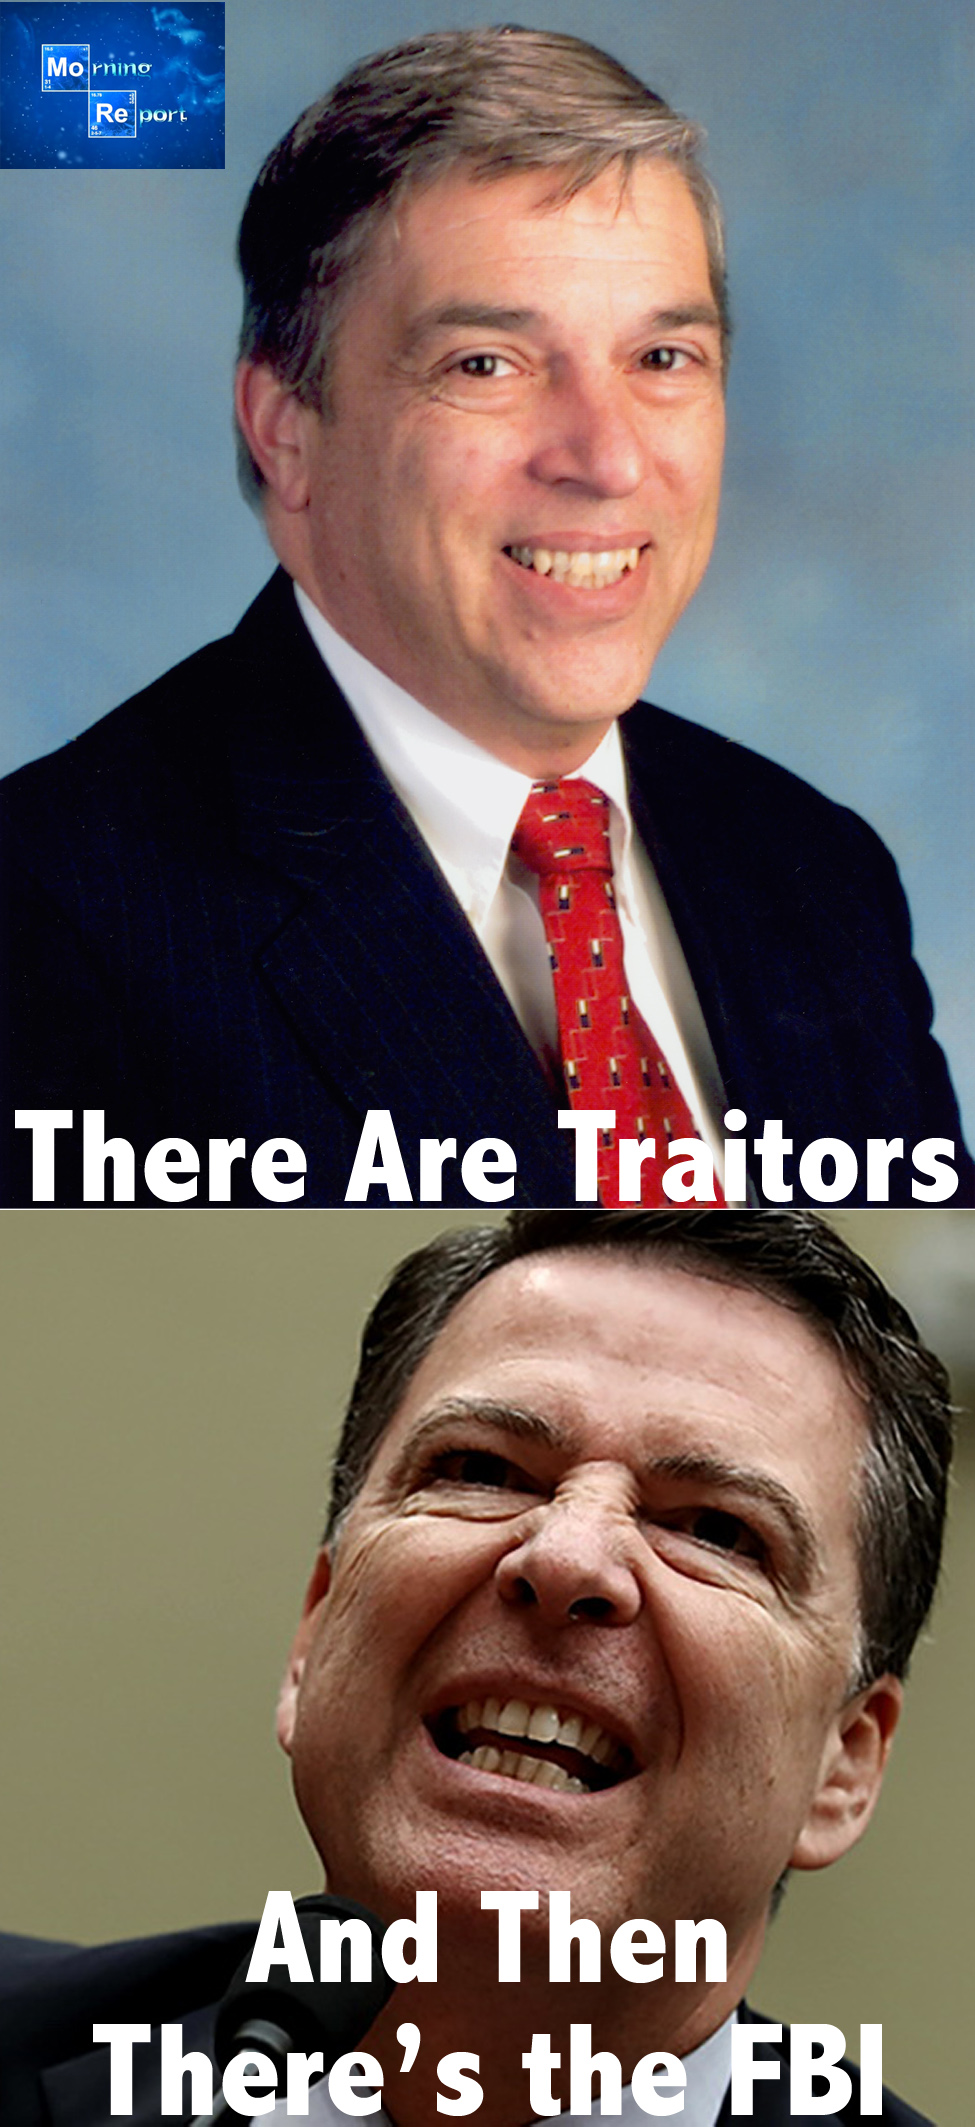 traitors.jpg